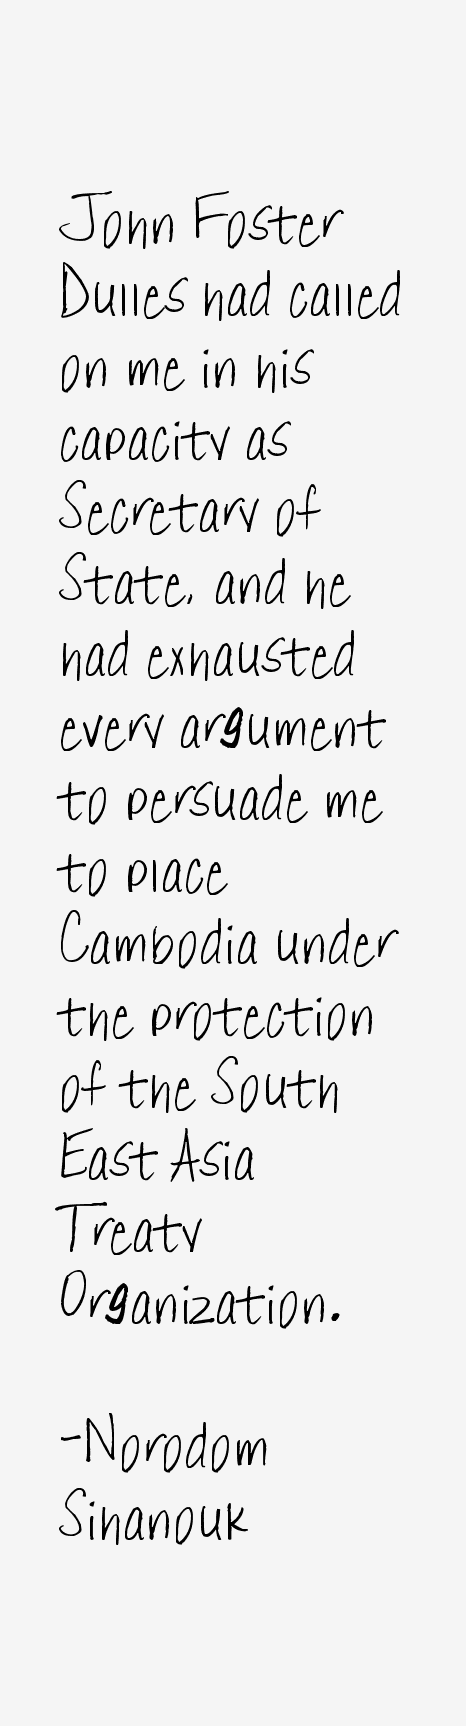 Norodom Sihanouk Quotes